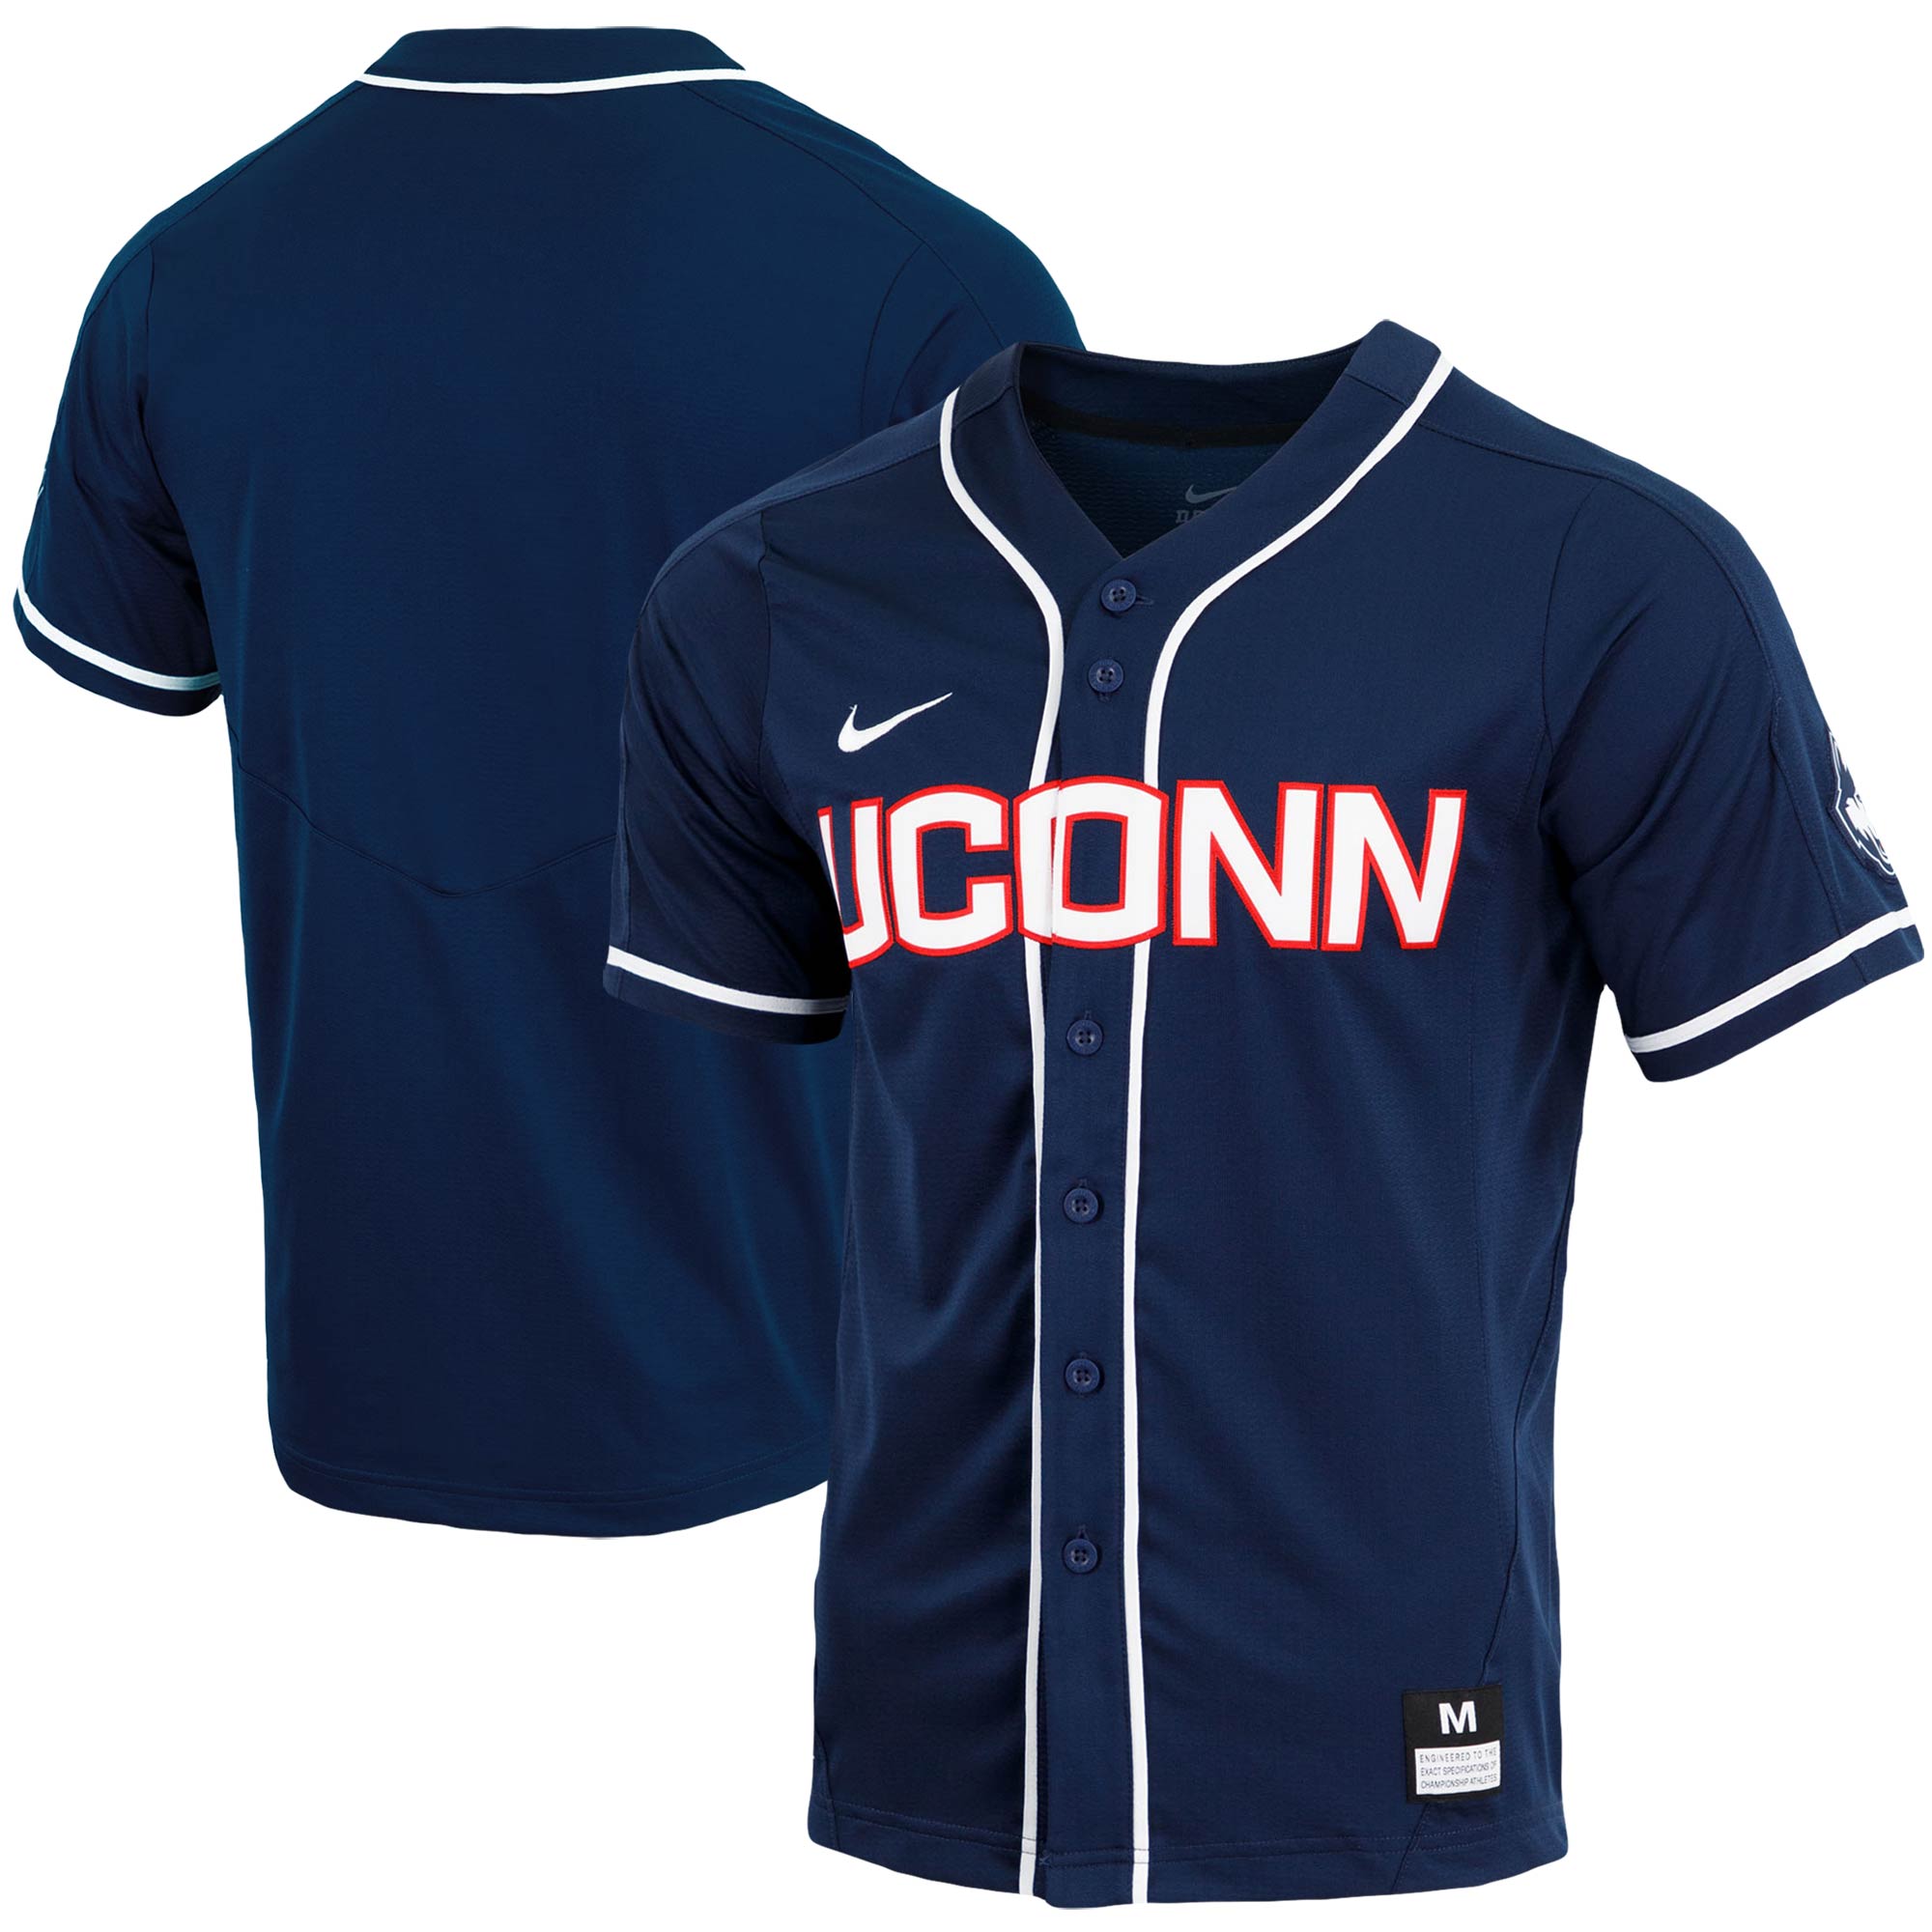 Uconn Huskies Replica Full-Button Baseball Jersey - Navy For Youth Women Men